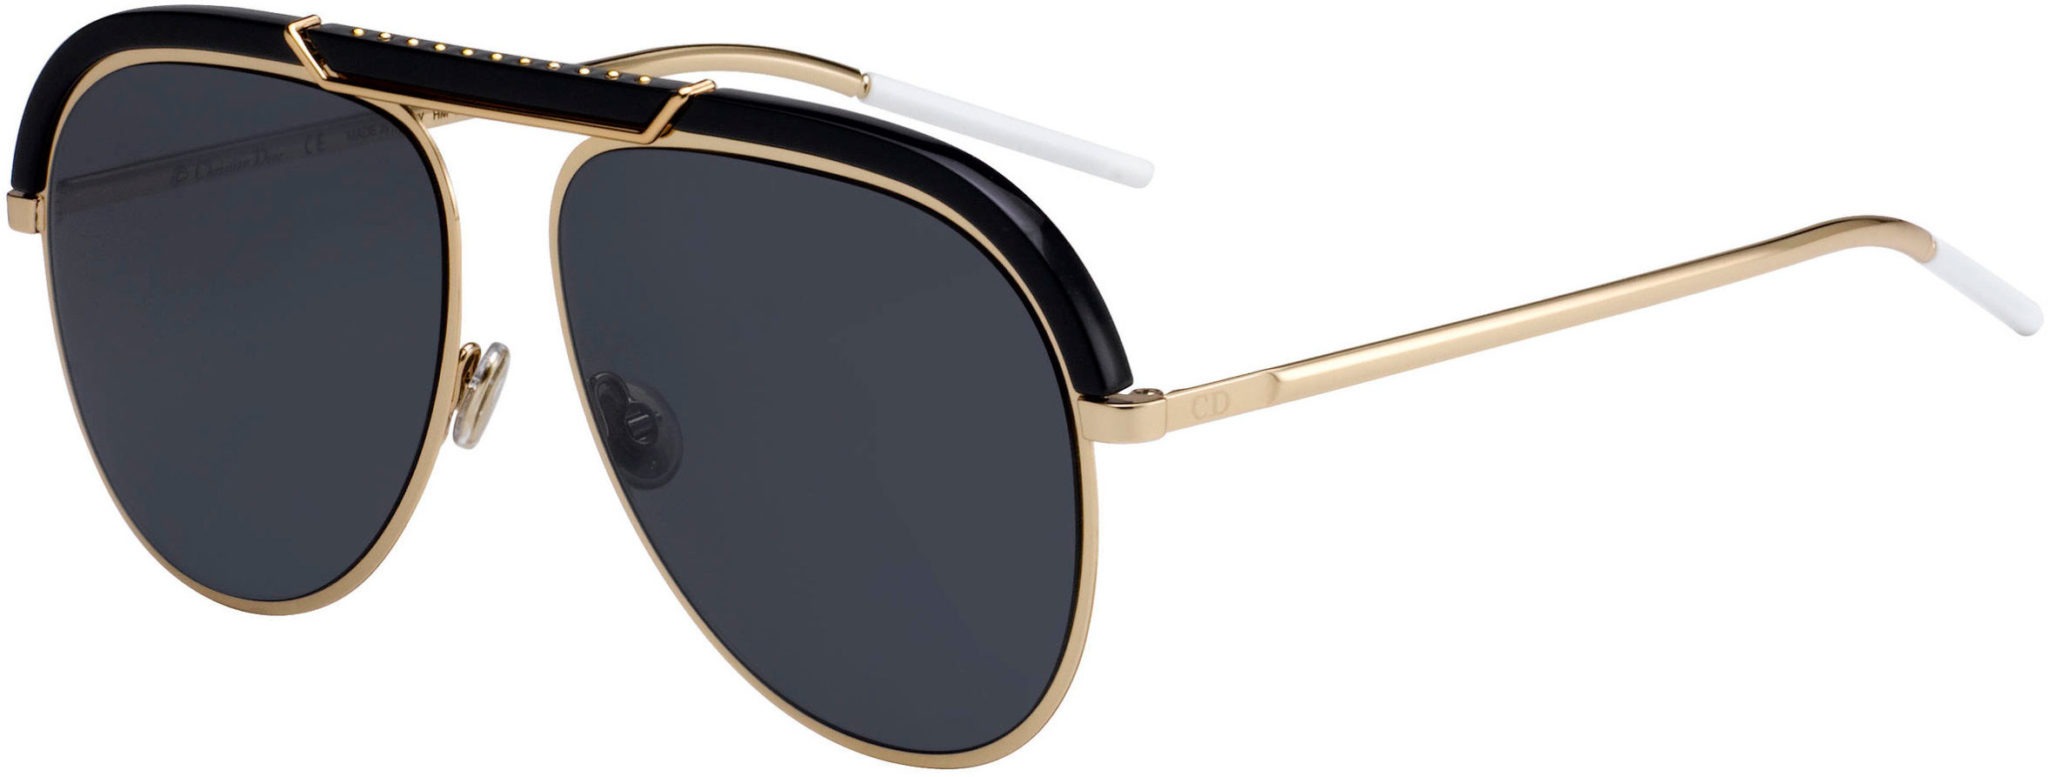 Christian Dior Desertic Sunglasses 